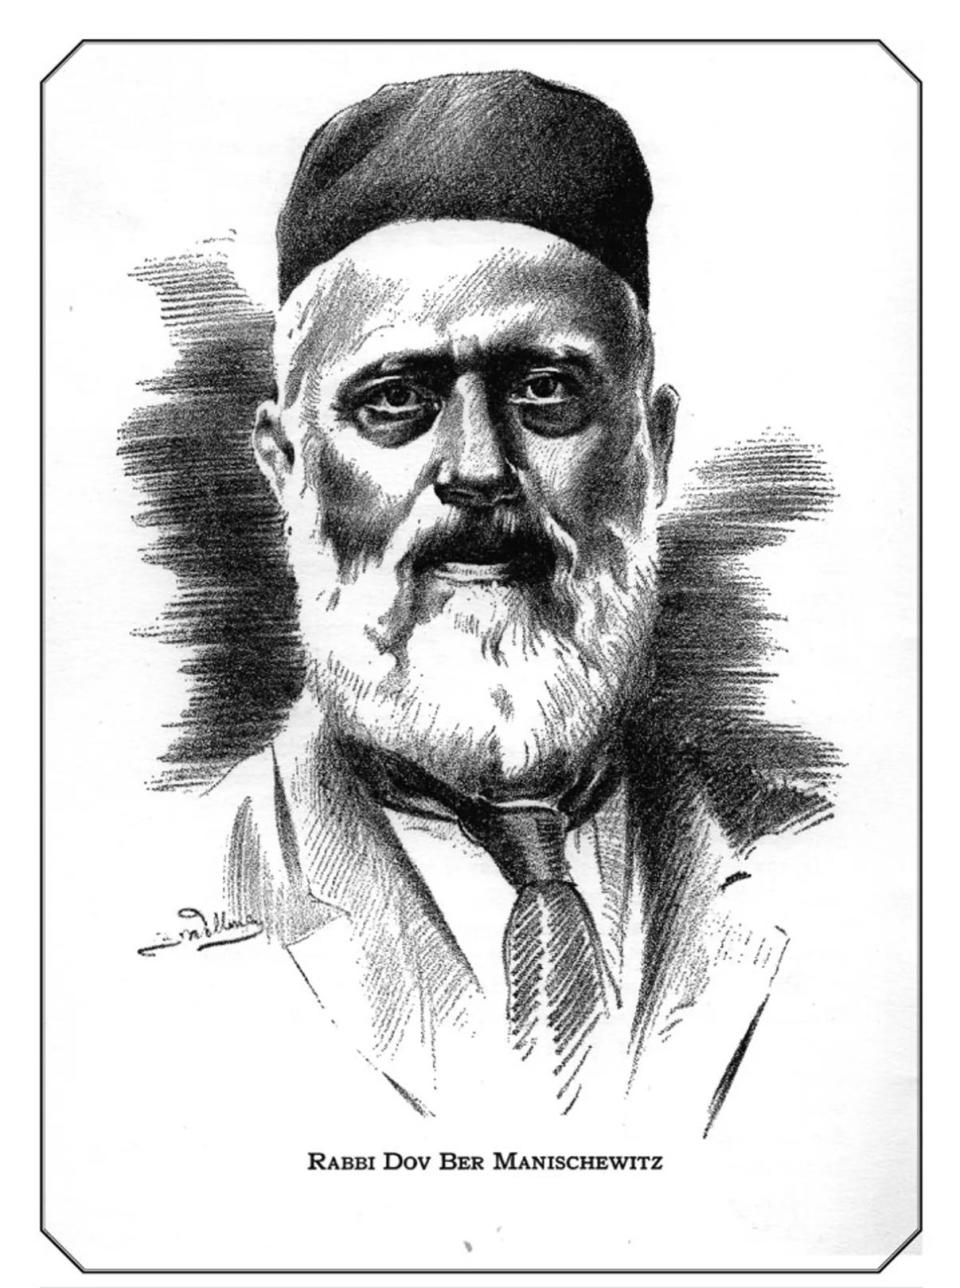 A drawing of Rabbi Dov Behr Manischewitz, founder of the Manischewitz Co., maker of matzo, in Cincinnati.